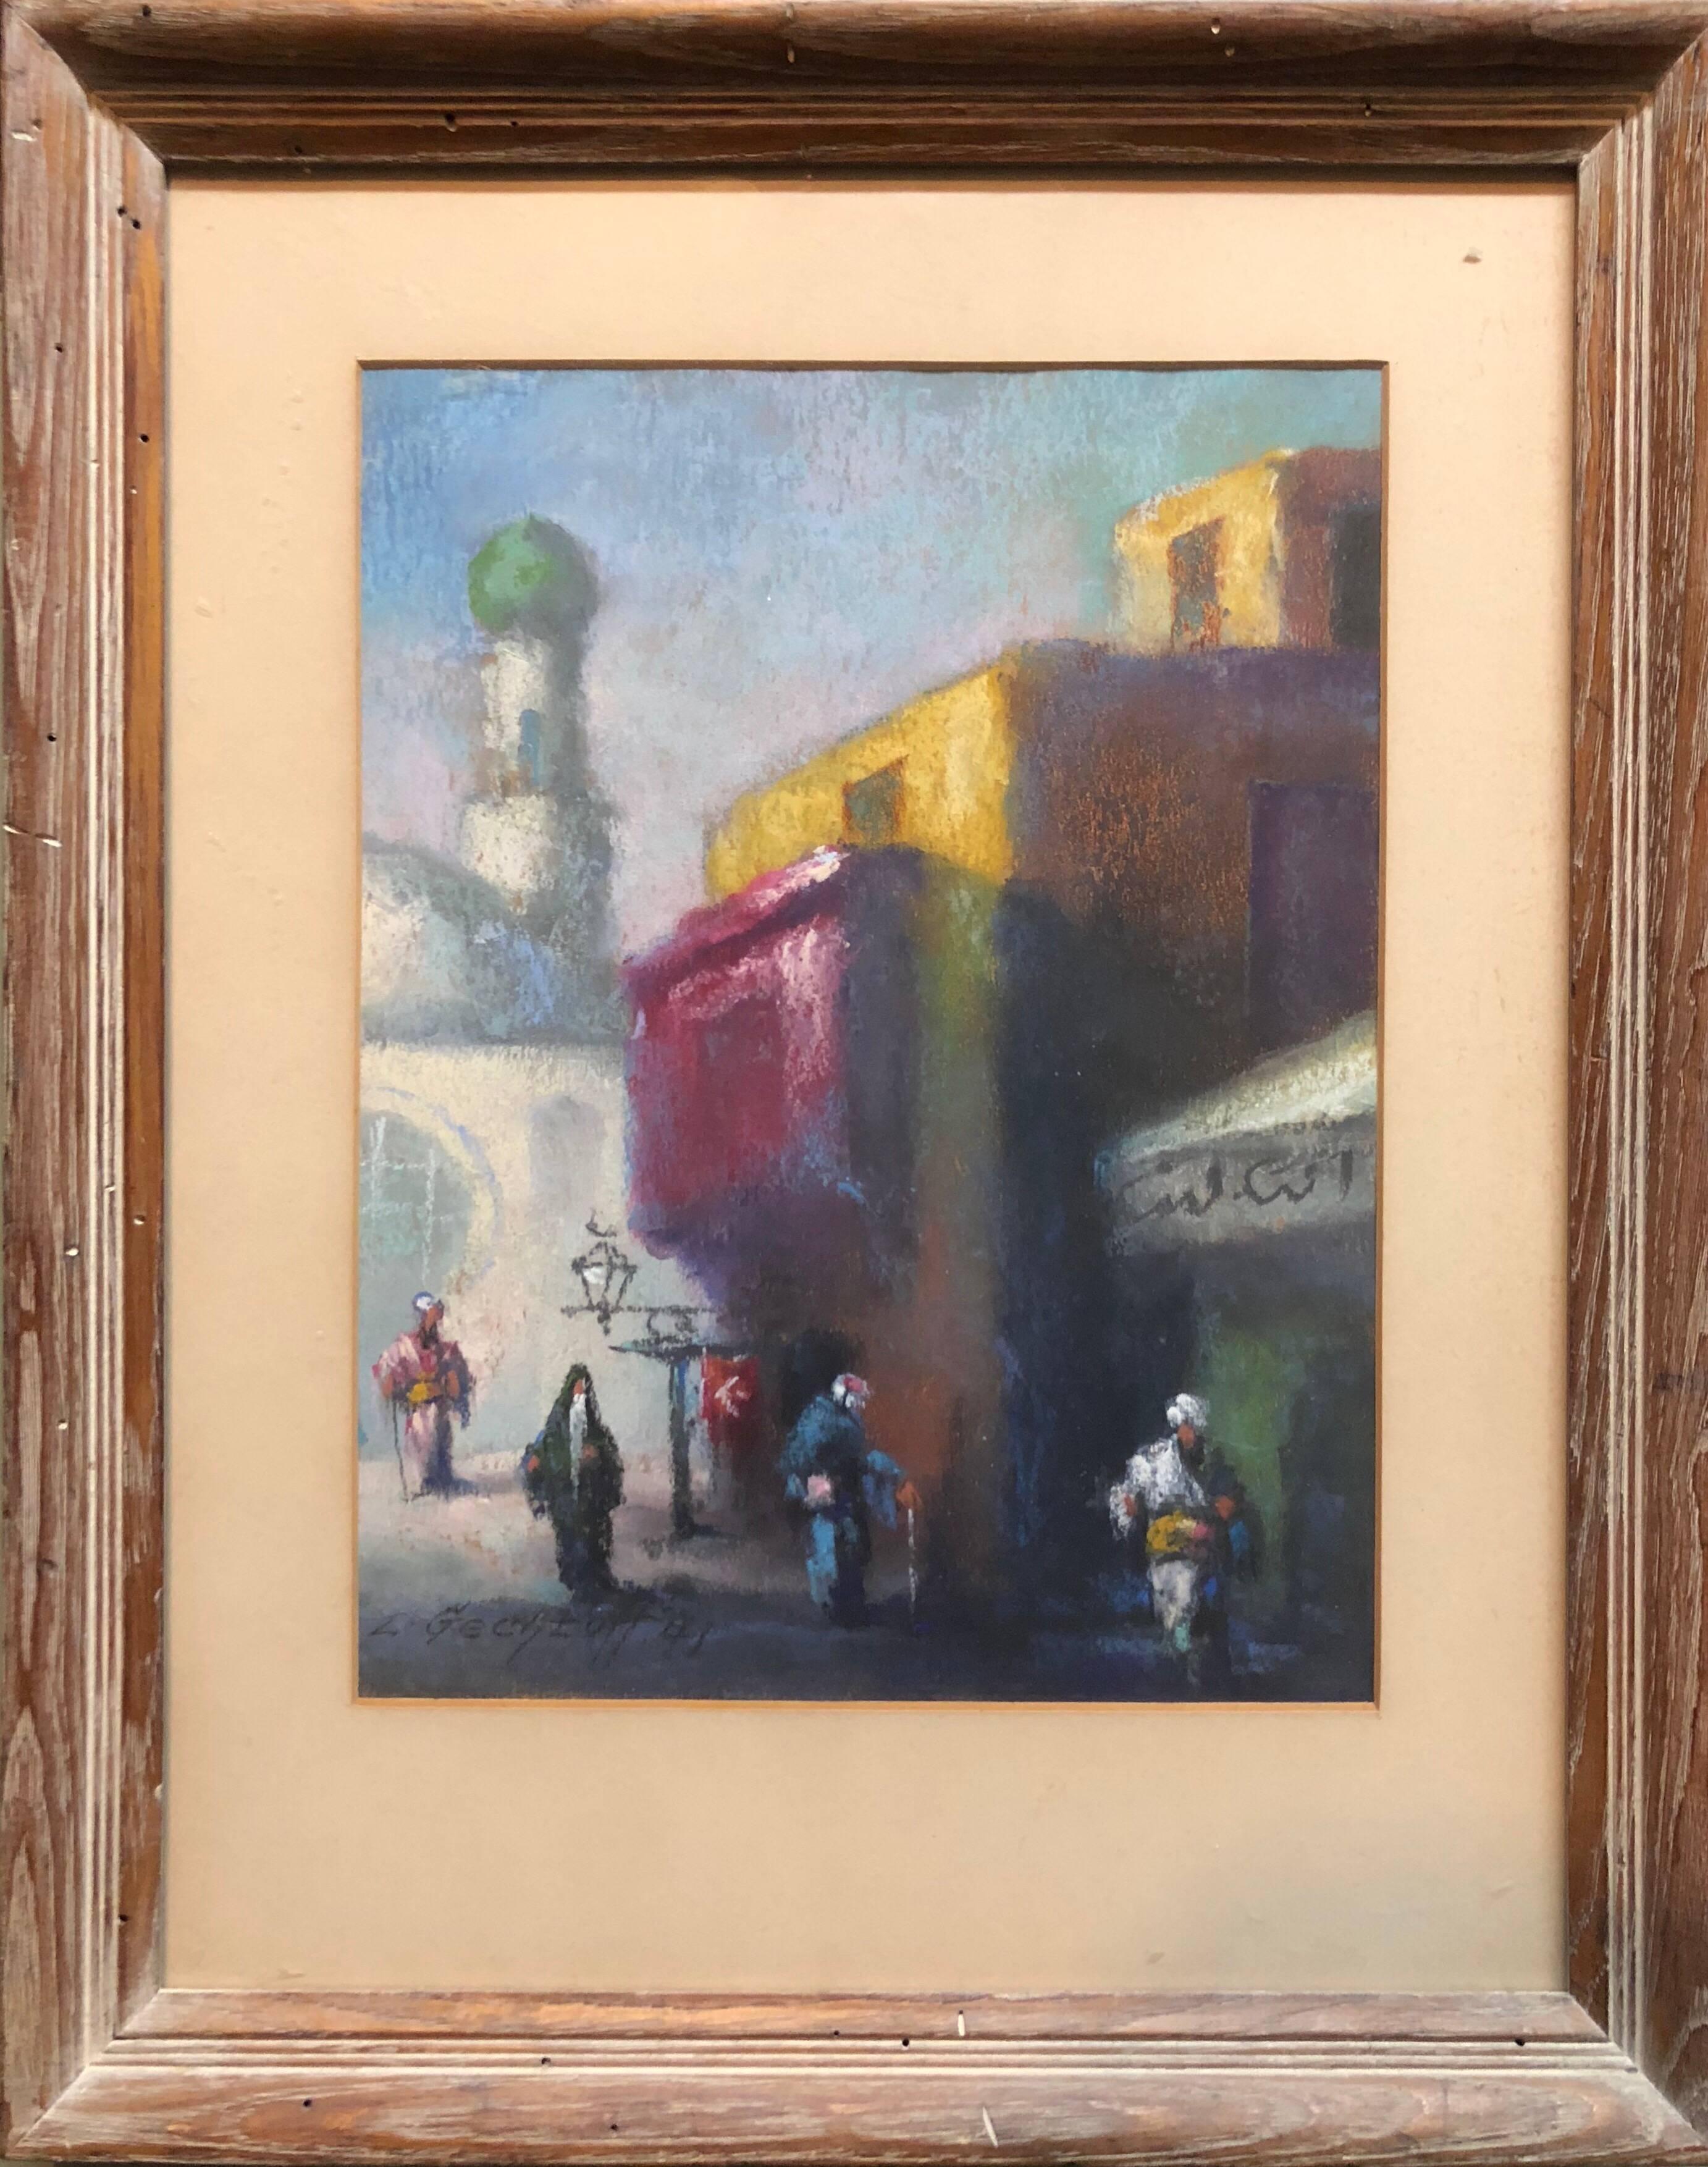 Orientalist Cairo Market Street Scene, Middle Eastern Bazaar - Painting by Leonid Gechtoff